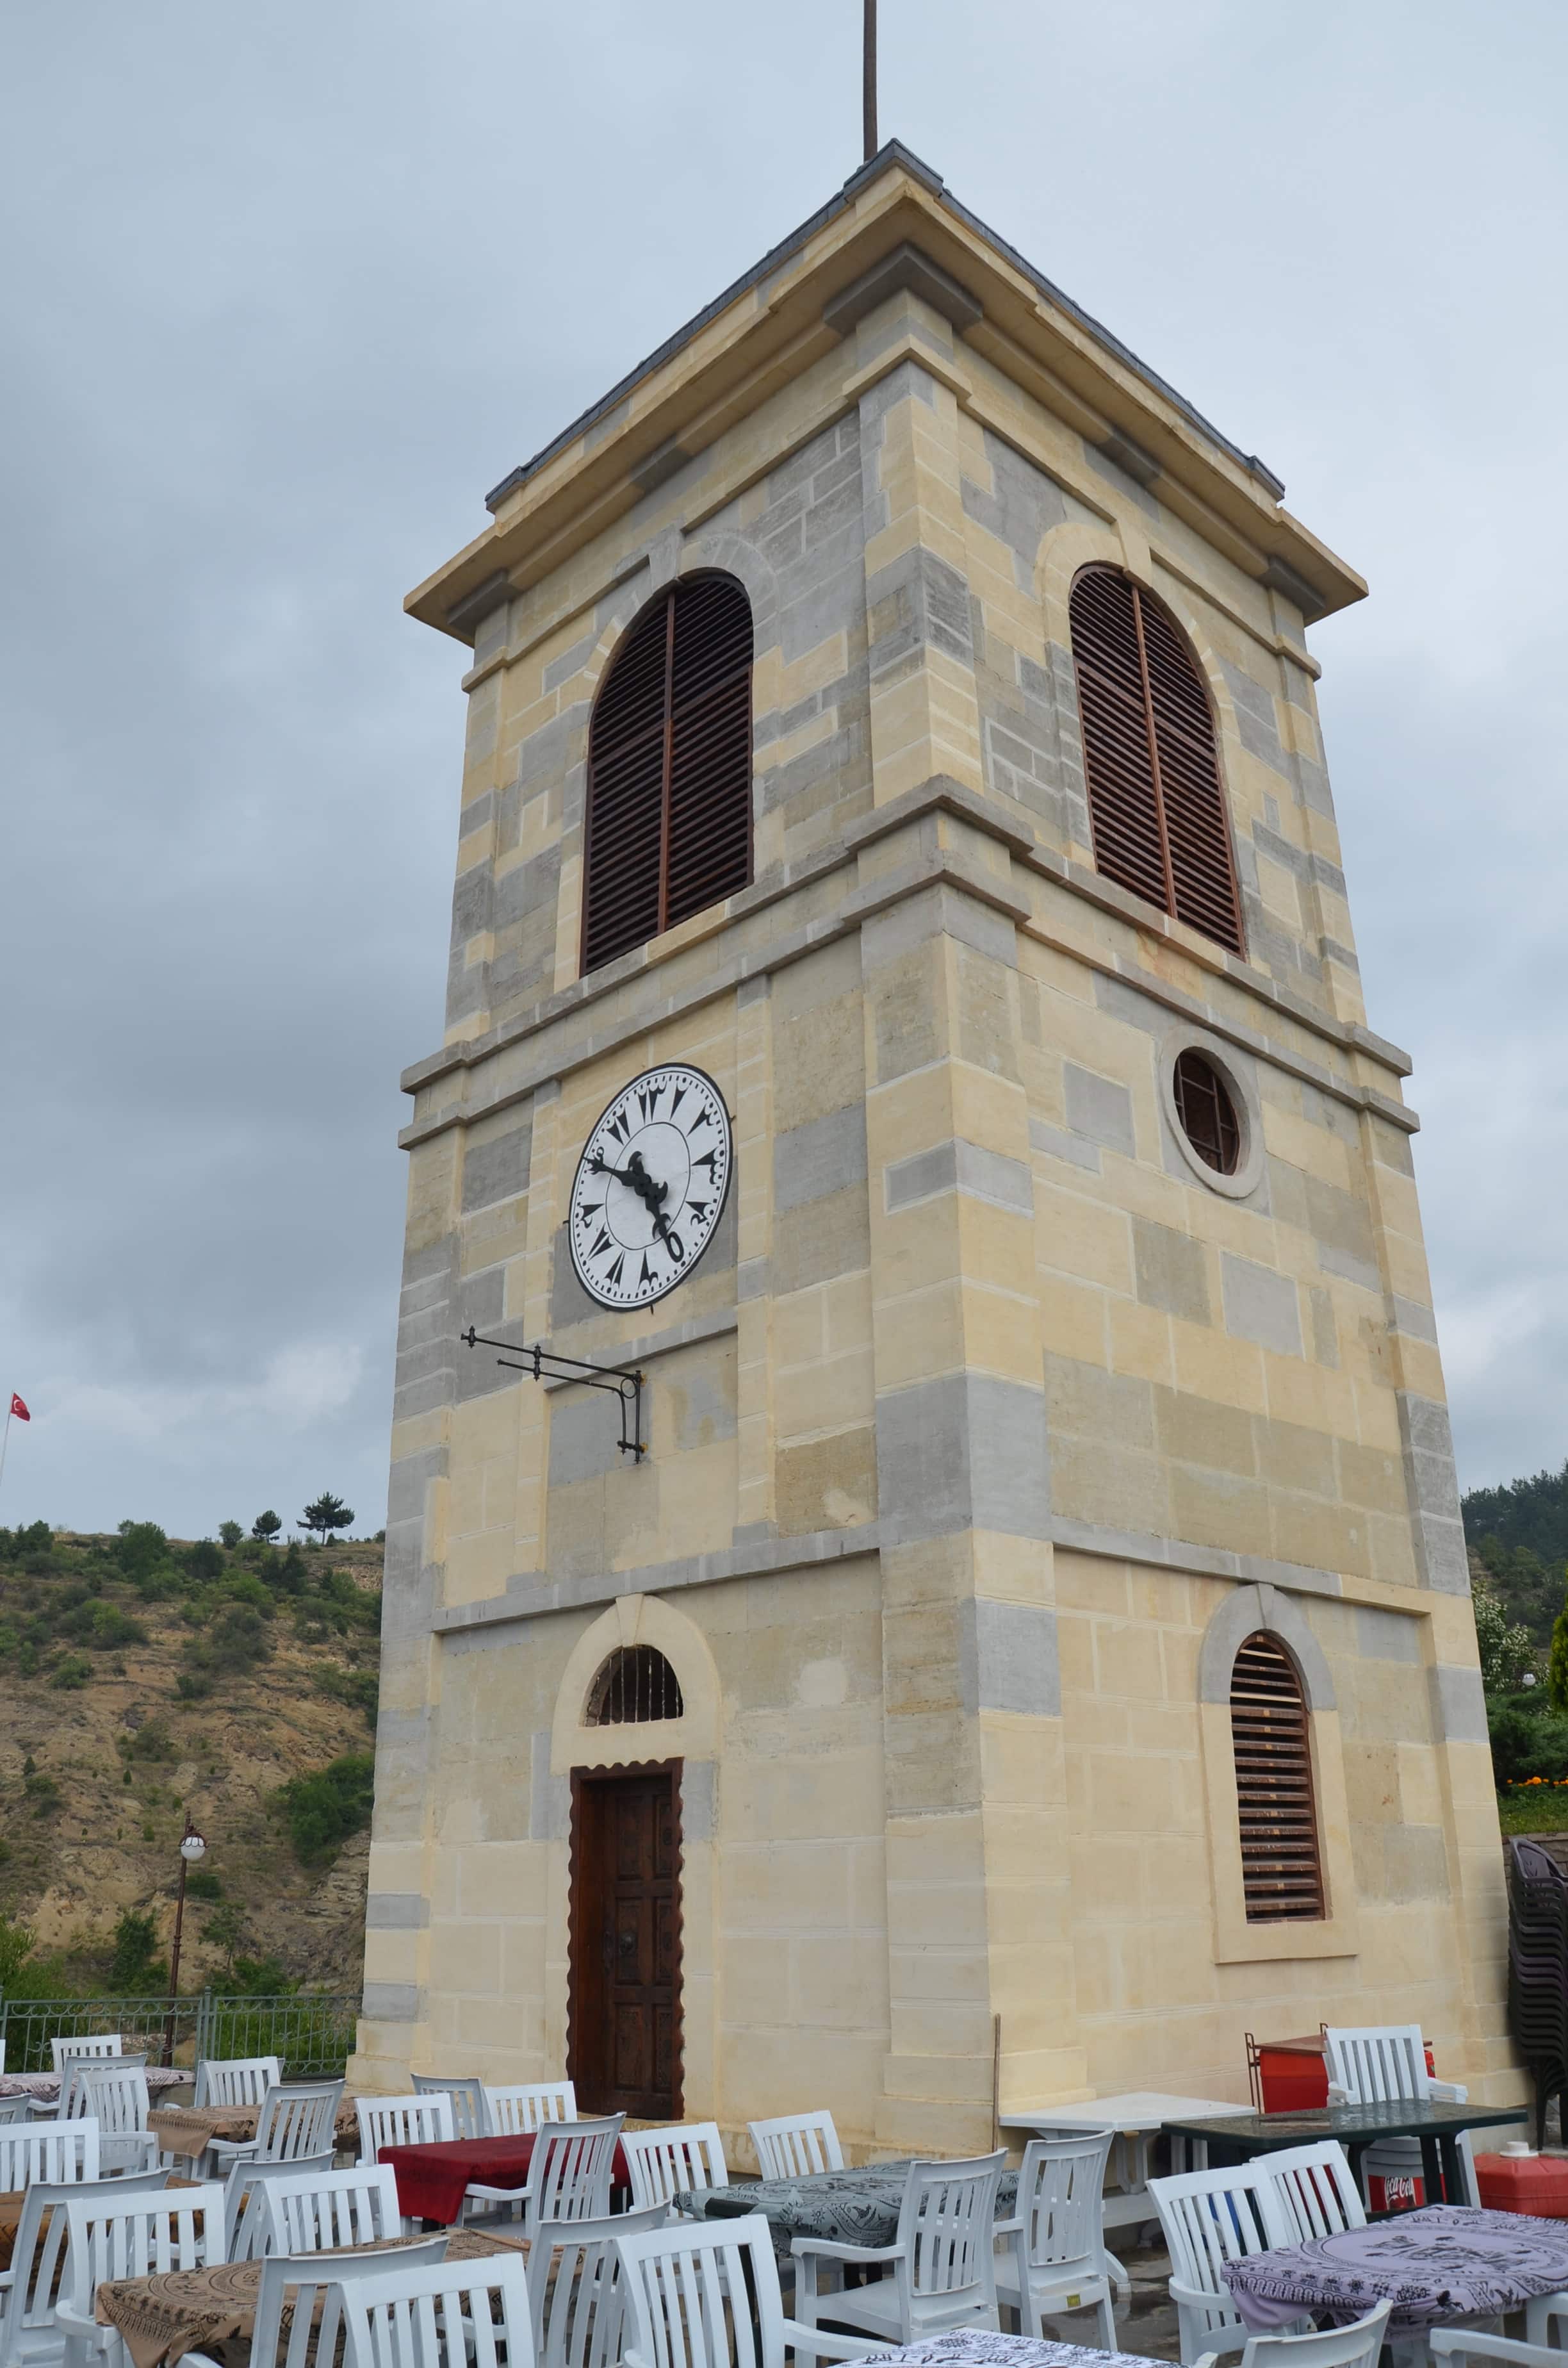 Clock tower in Kastamonu, Turkey